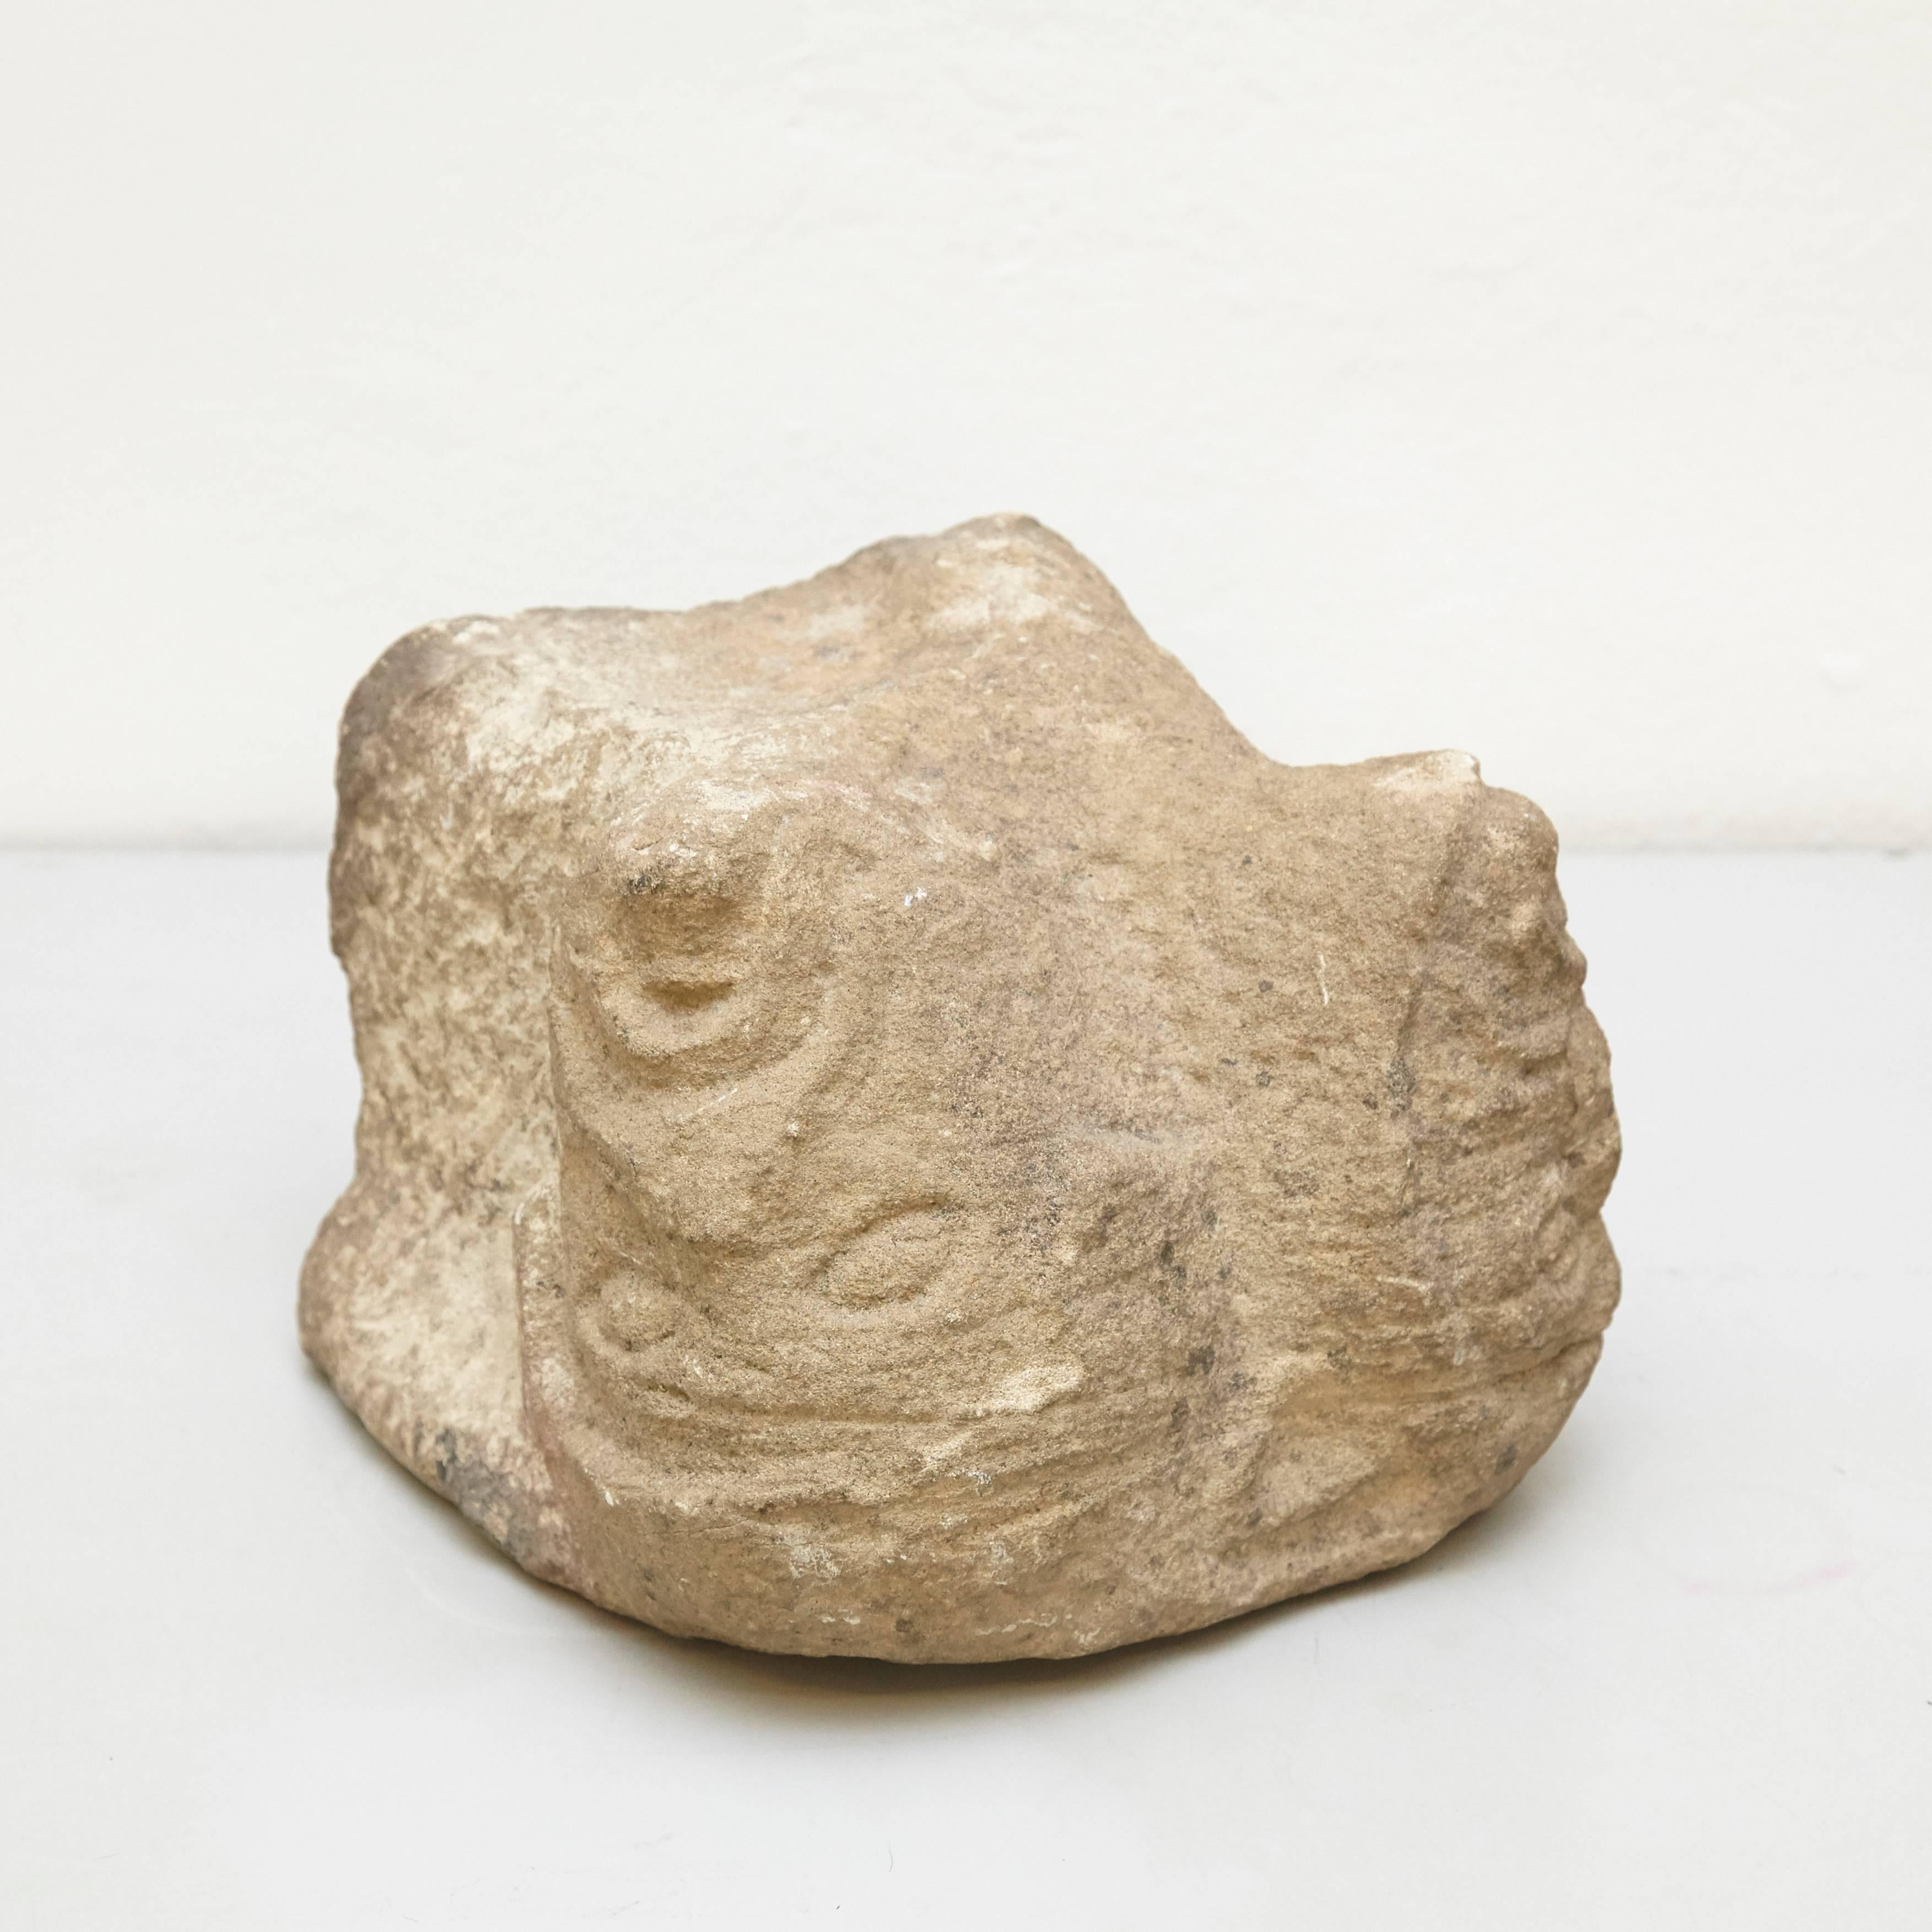  Stone Sculpture 3